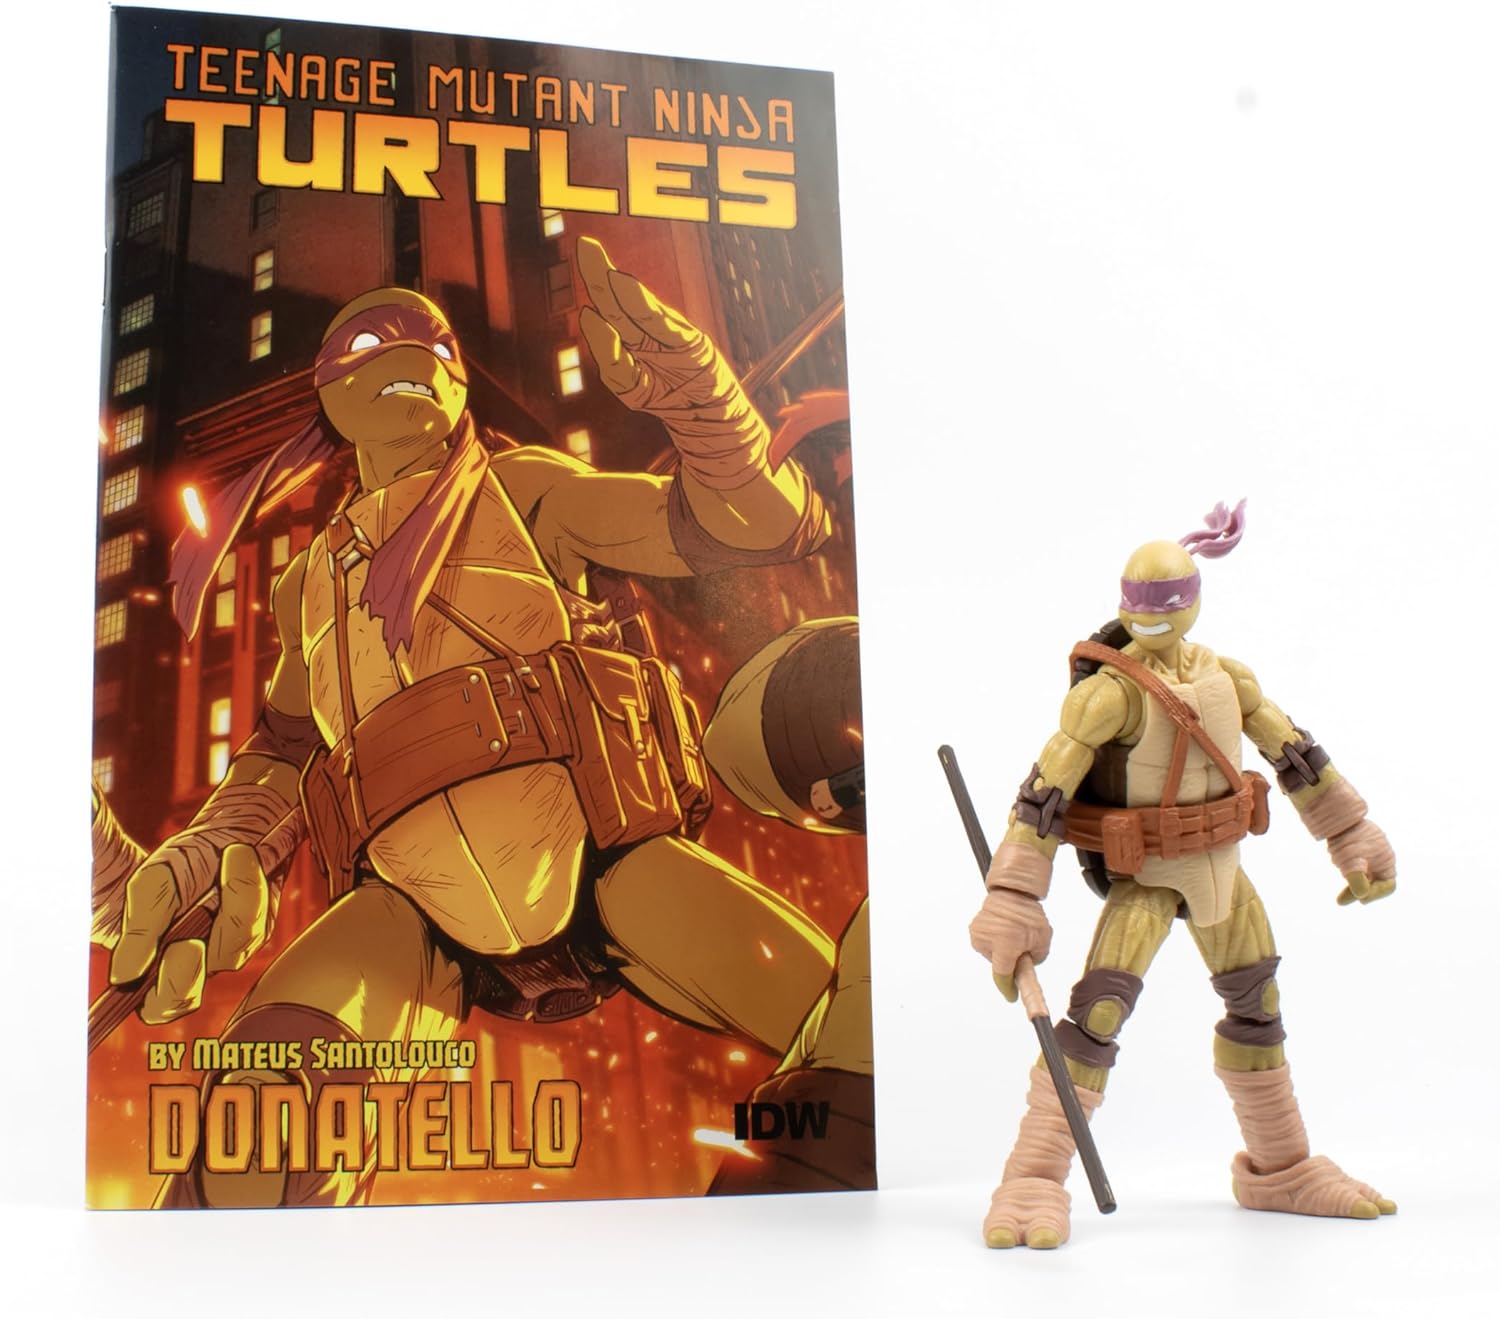 Teenage Mutant Ninja Turtles Donatello V2 Idw Comic Book & Bst Axn 5in Action Figure